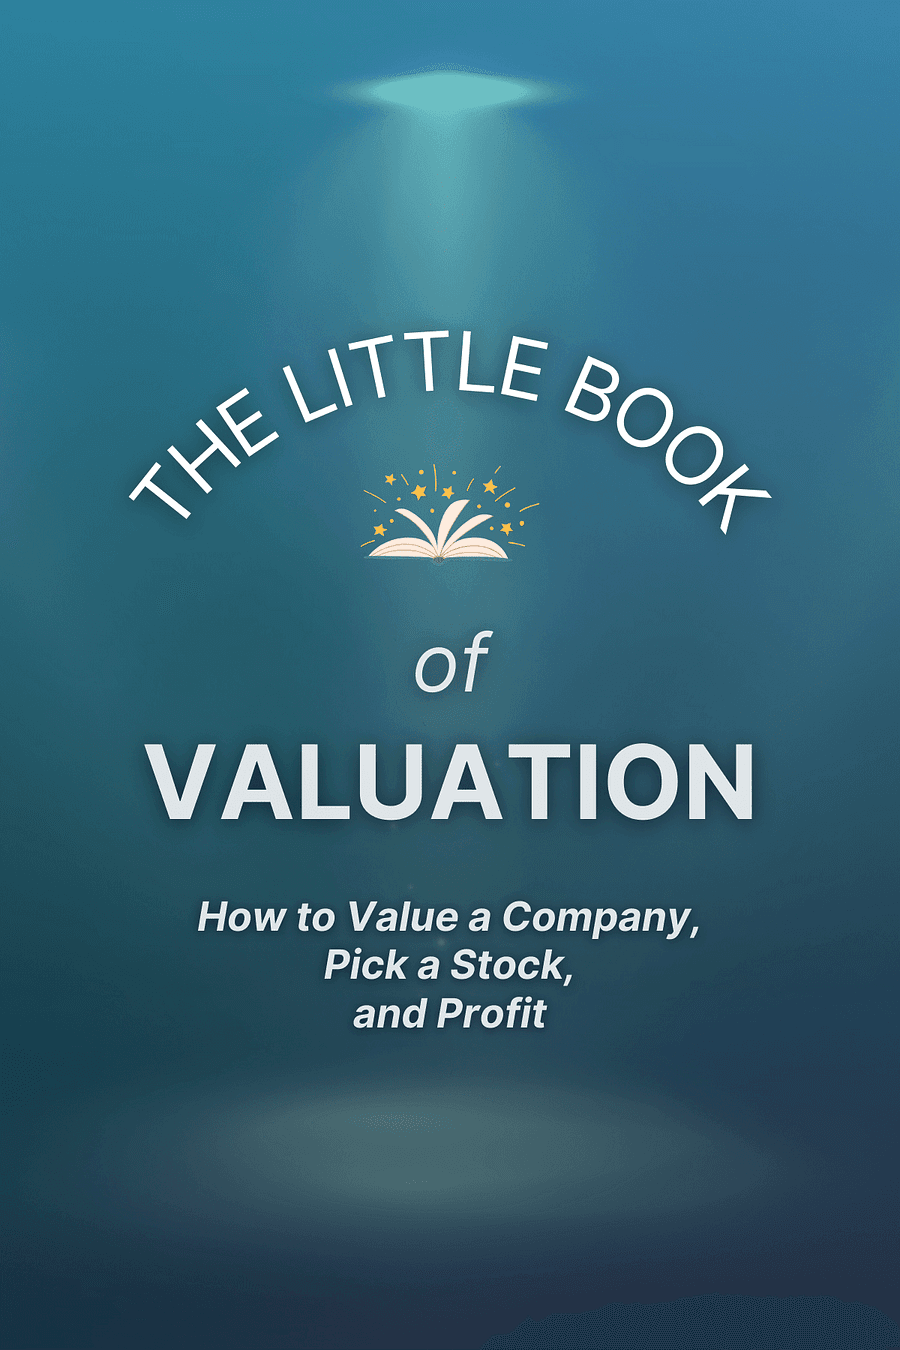 The Little Book of Valuation by Aswath Damodaran - Book Summary